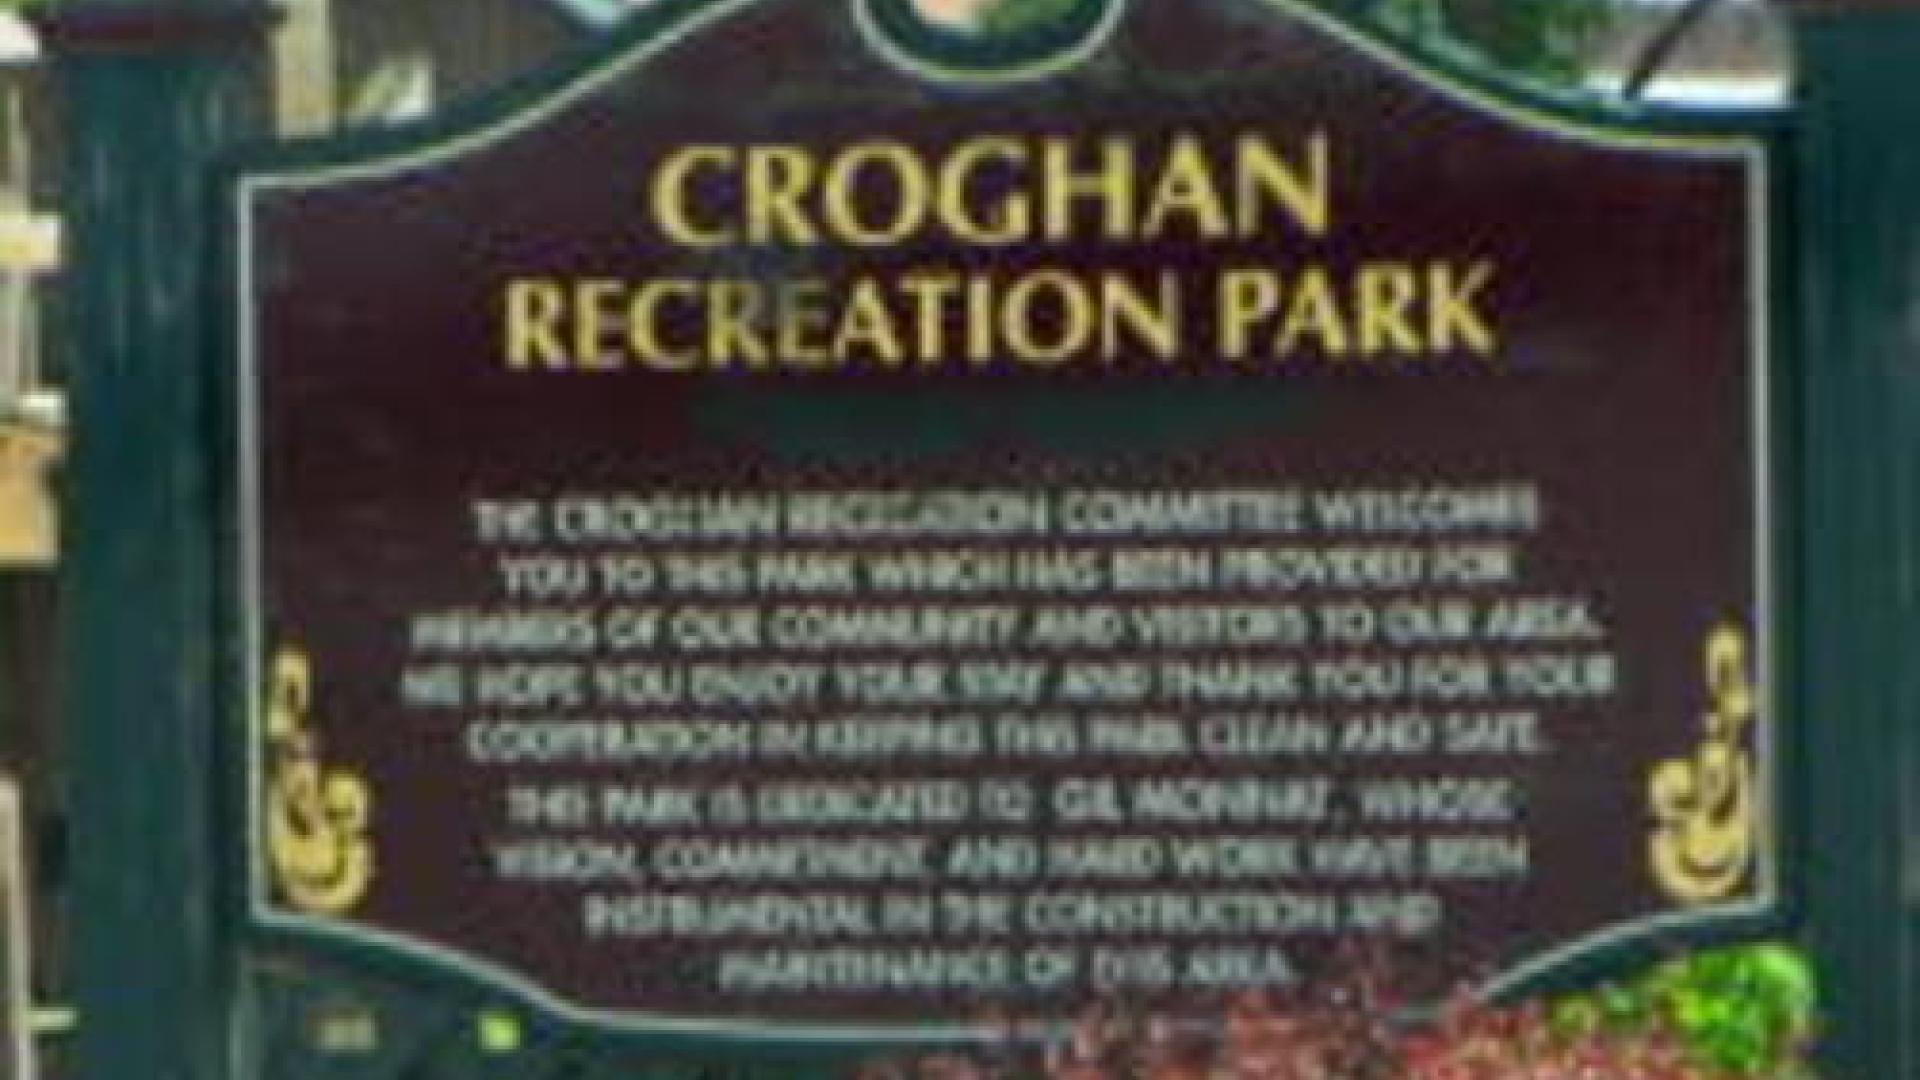 Croghan Recreation Park Ice Skating